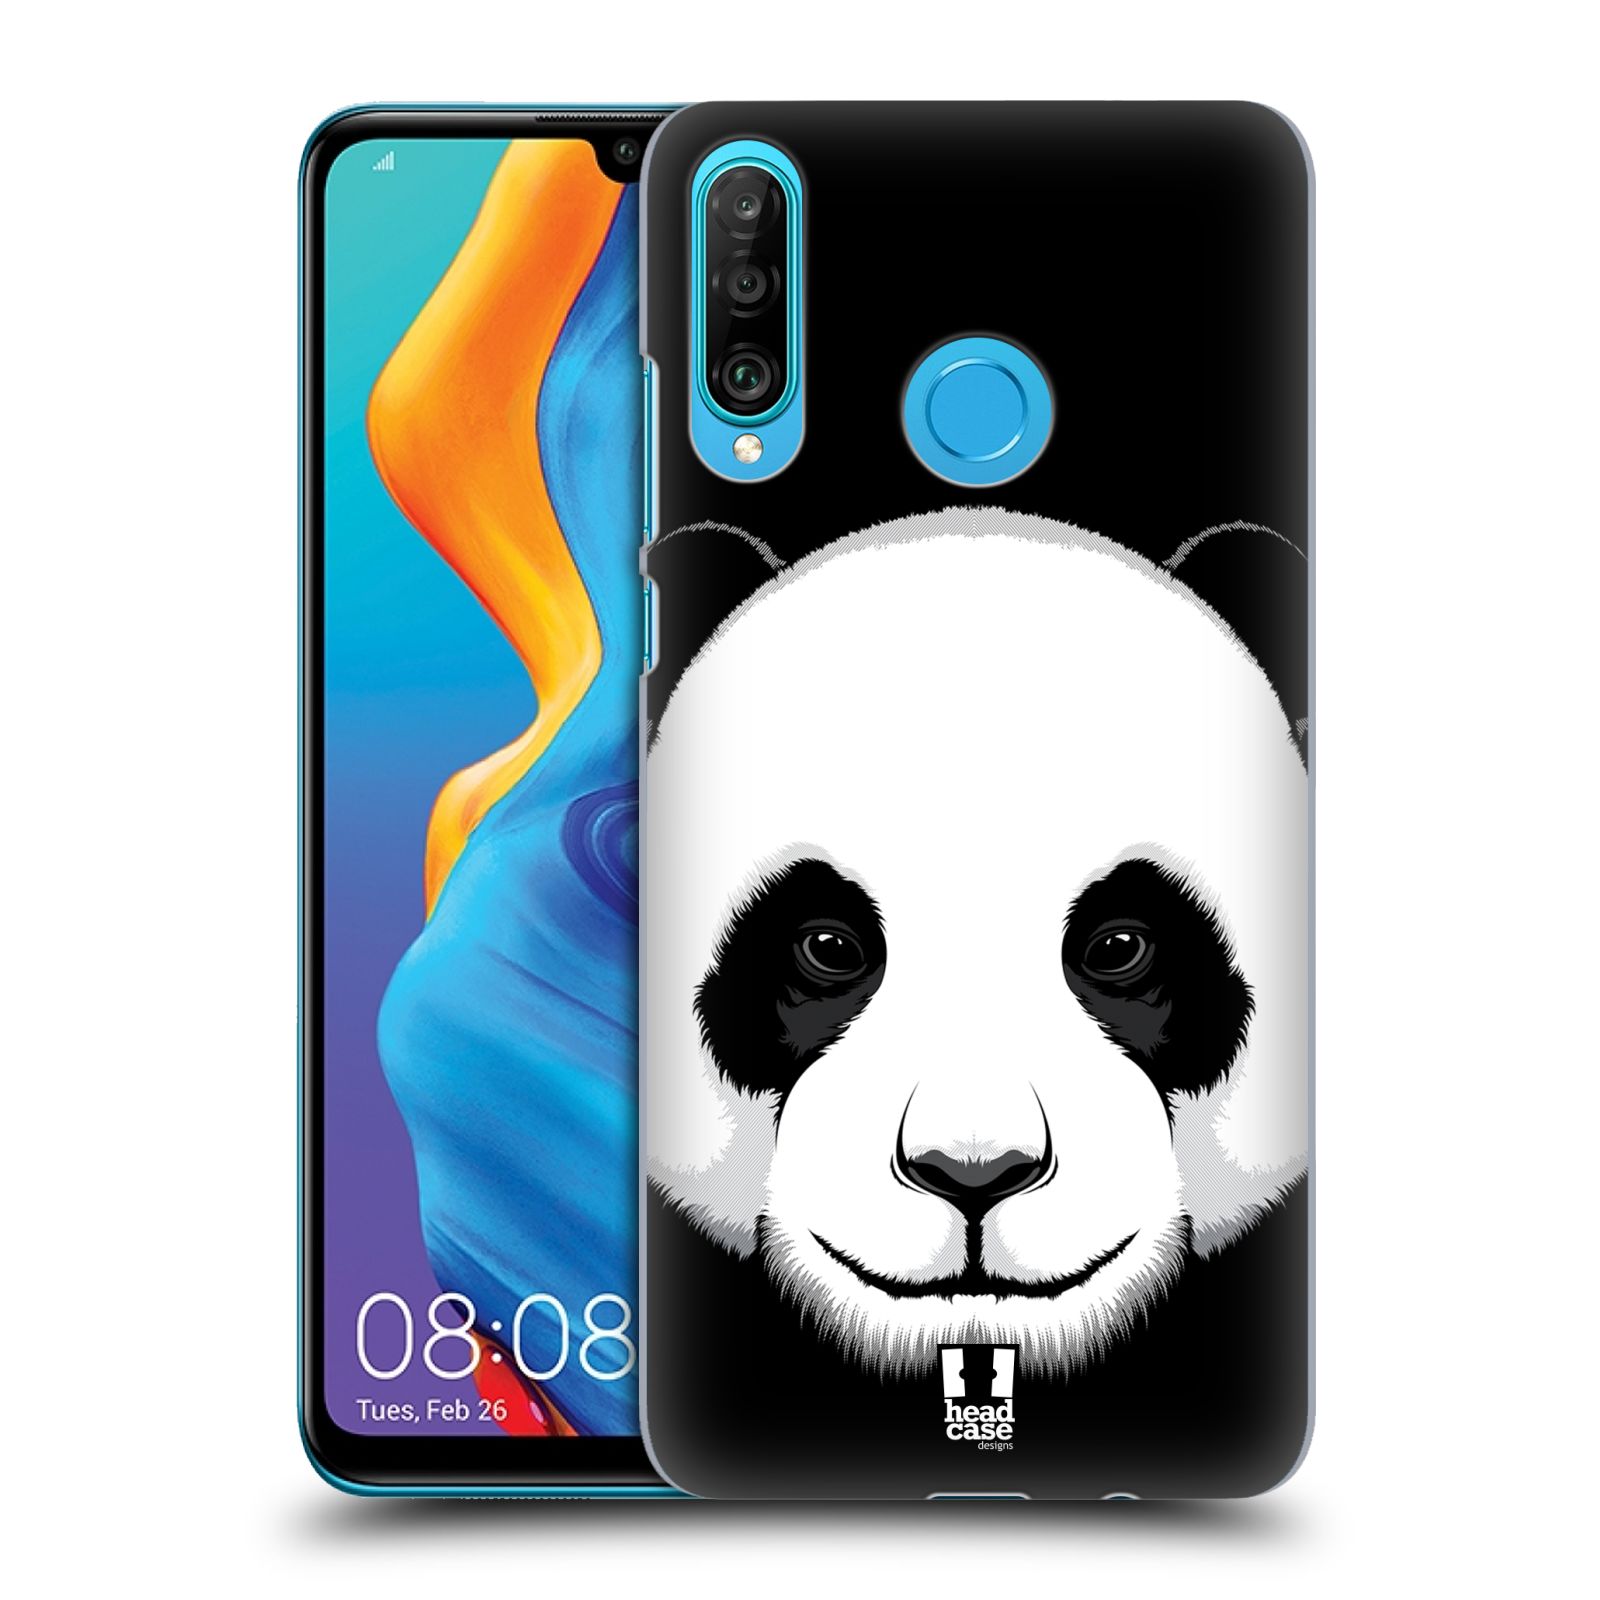 Pouzdro na mobil Huawei P30 LITE - HEAD CASE - vzor Zvíře kreslená tvář panda